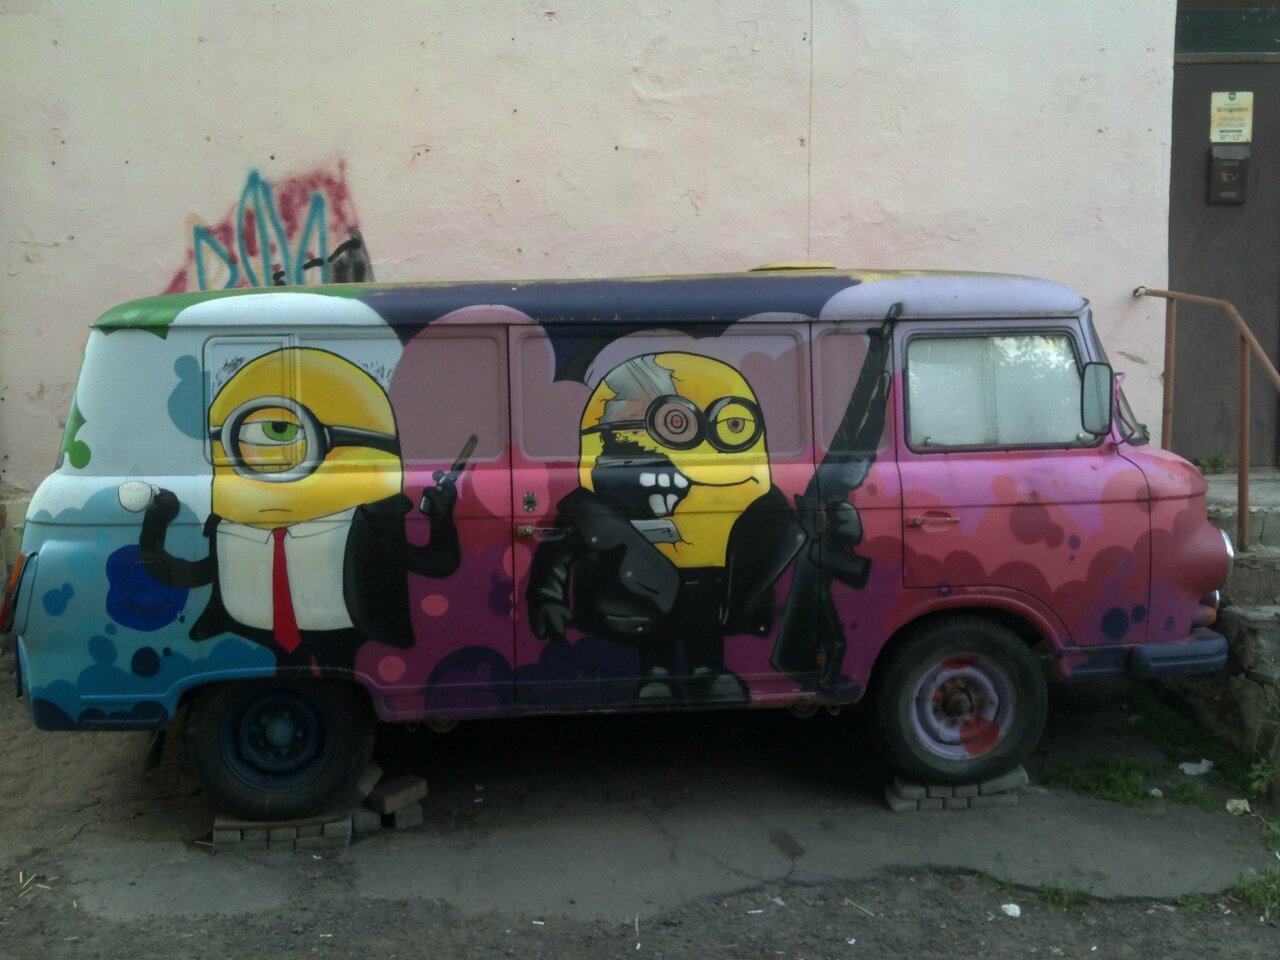 art on car #minions #car #graffiti #art https://t.co/JsUebKjfgJ